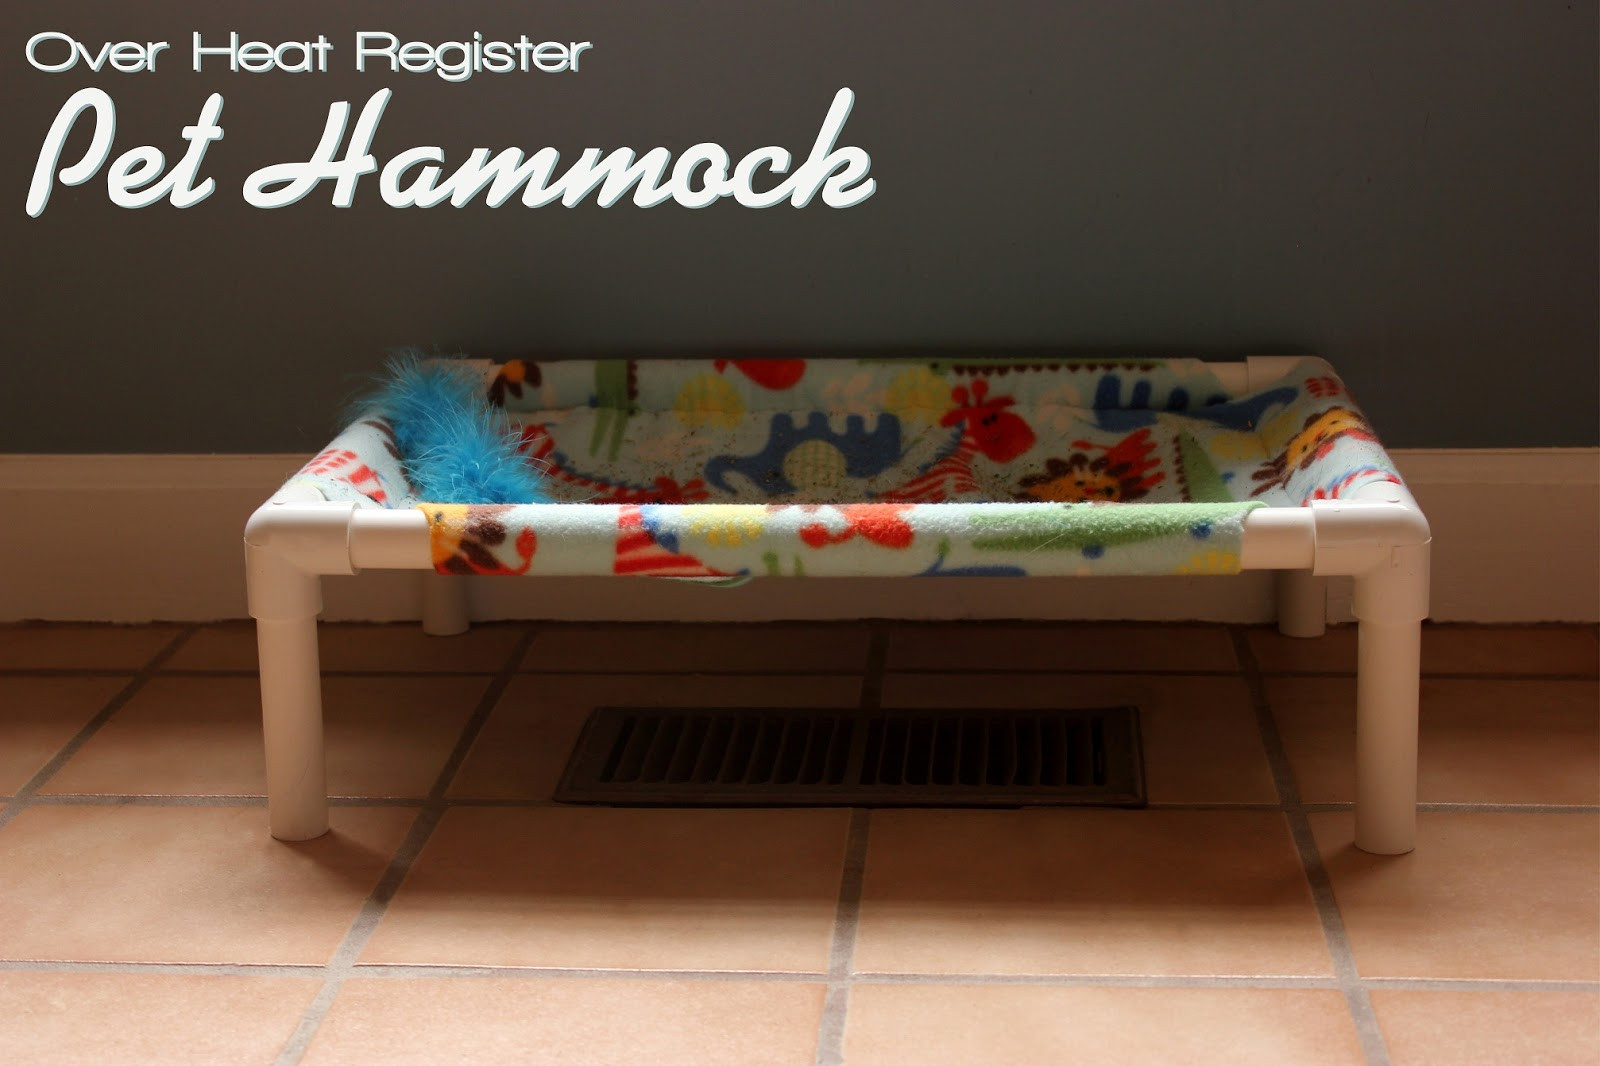 DIY Dog Hammock Bed
 The Handcrafted Life DIY Over Heat Register Pet Hammock